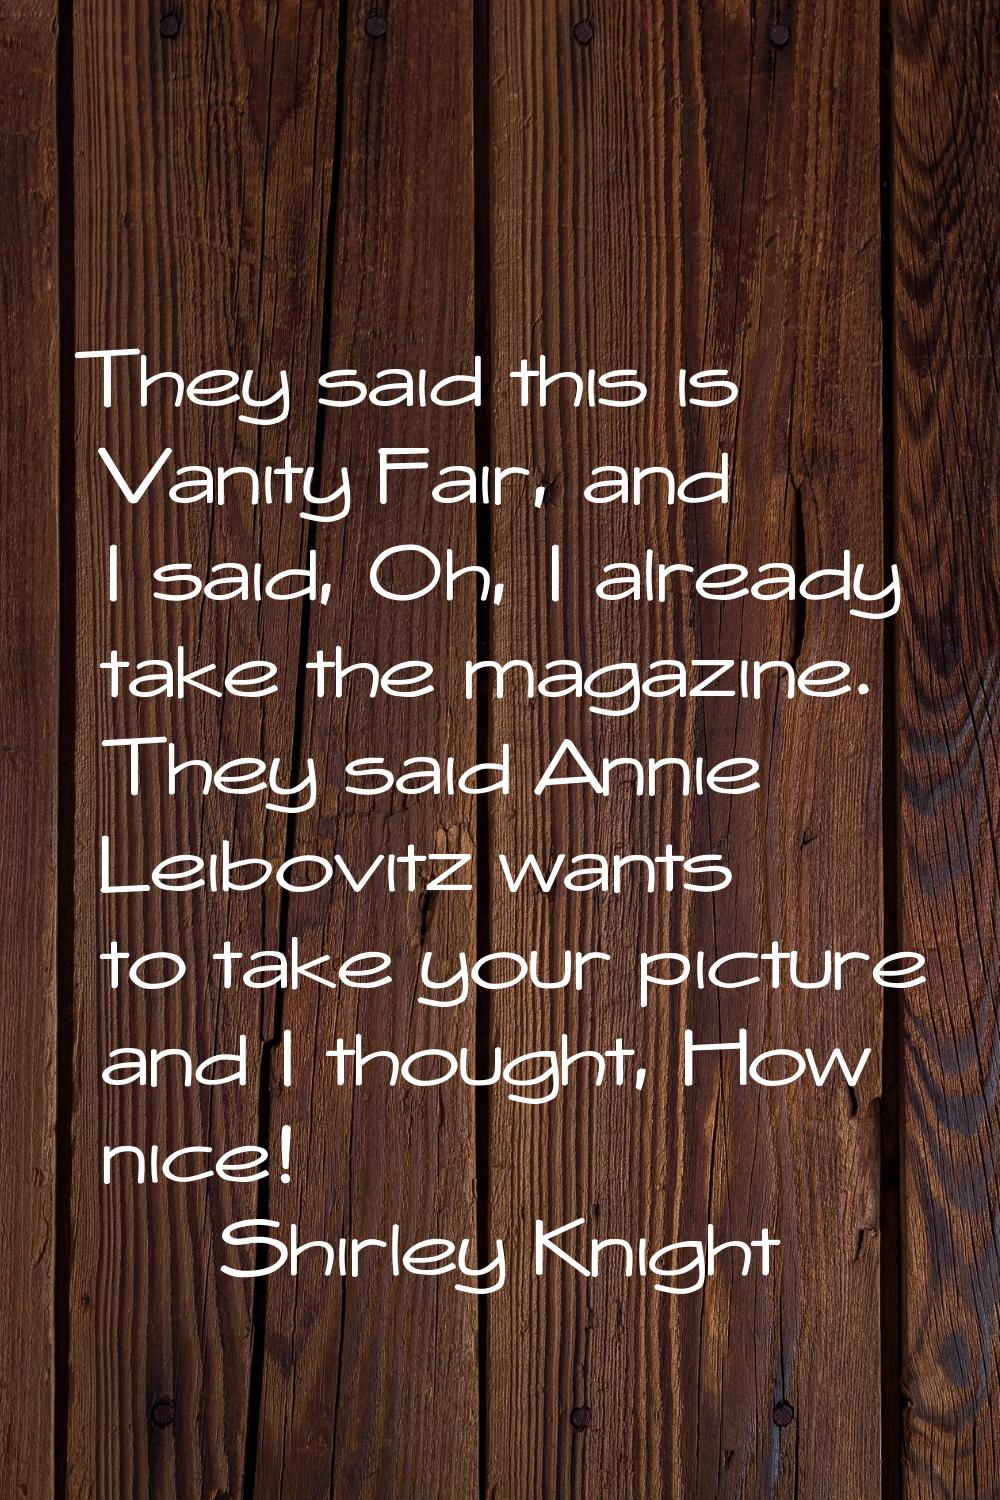 They said this is Vanity Fair, and I said, Oh, I already take the magazine. They said Annie Leibovi